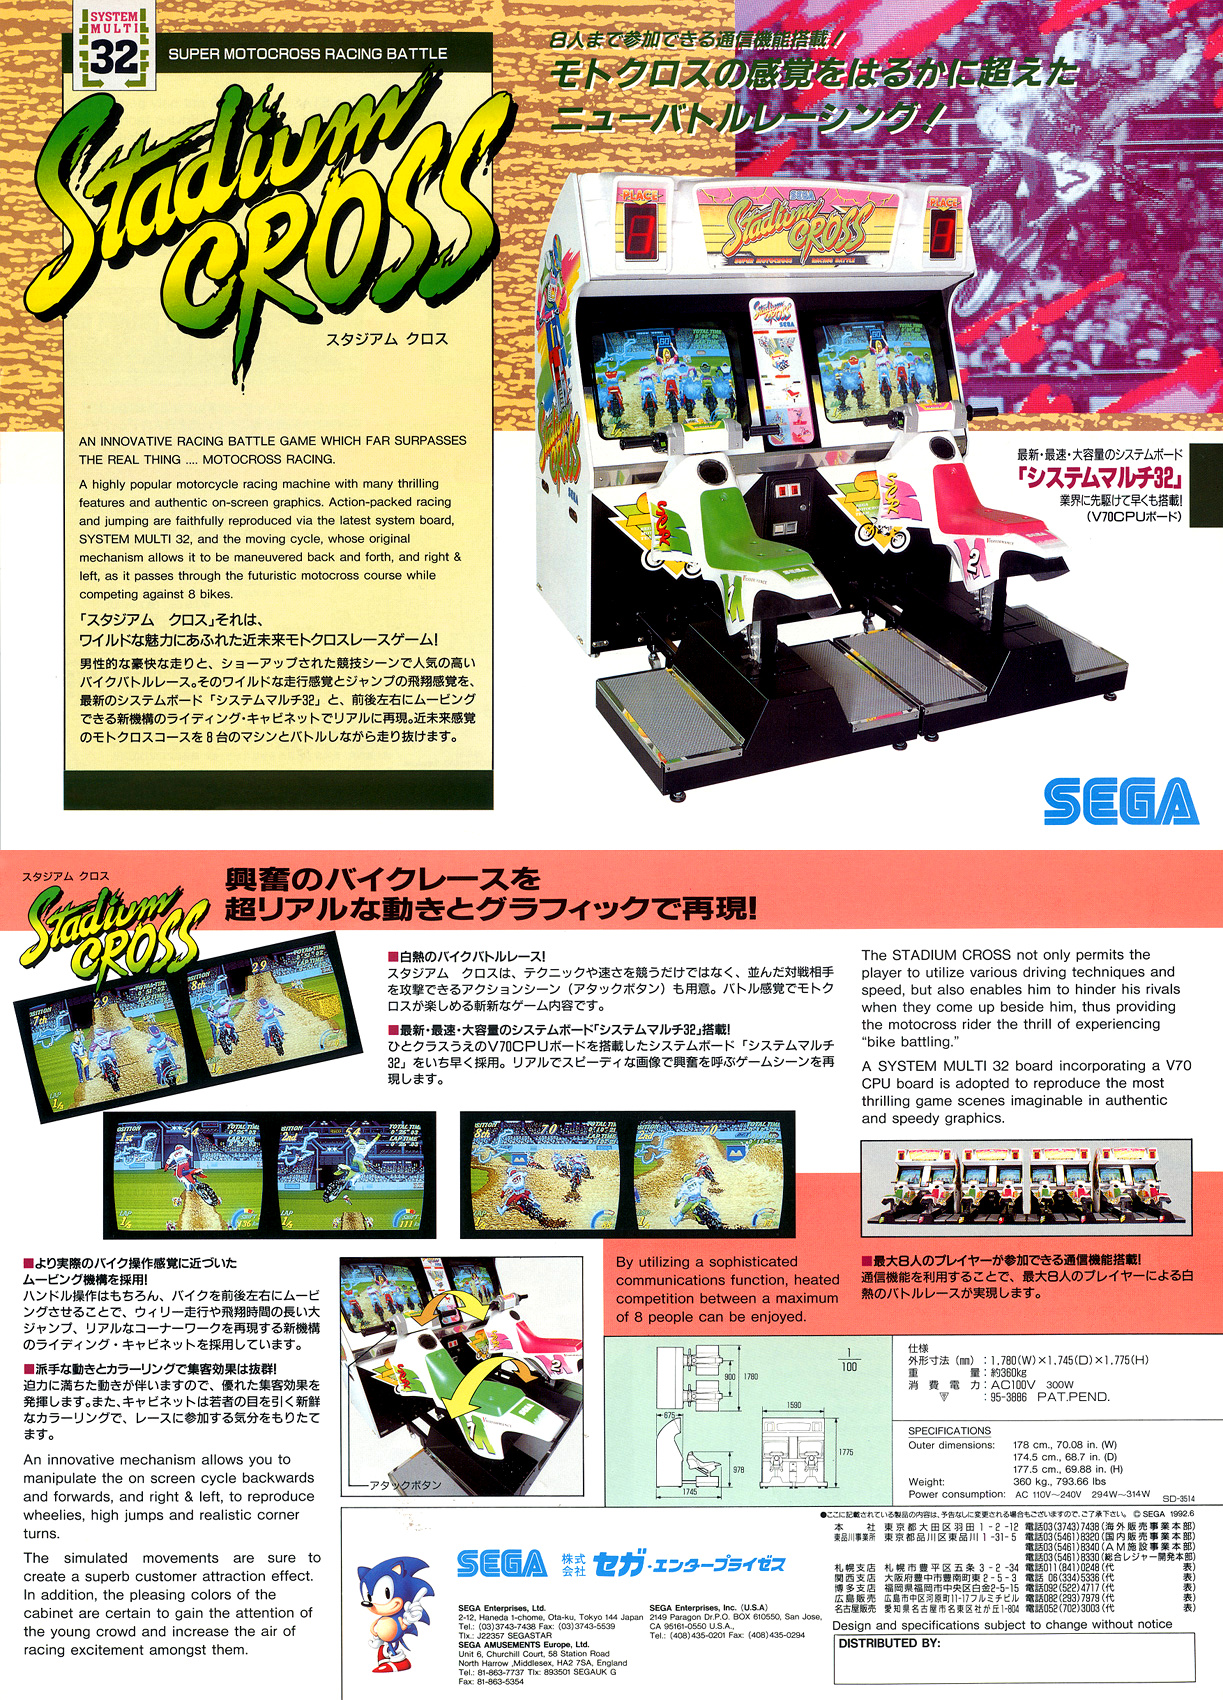 1992 SEGA STADIUM CROSS JP VIDEO FLYER 